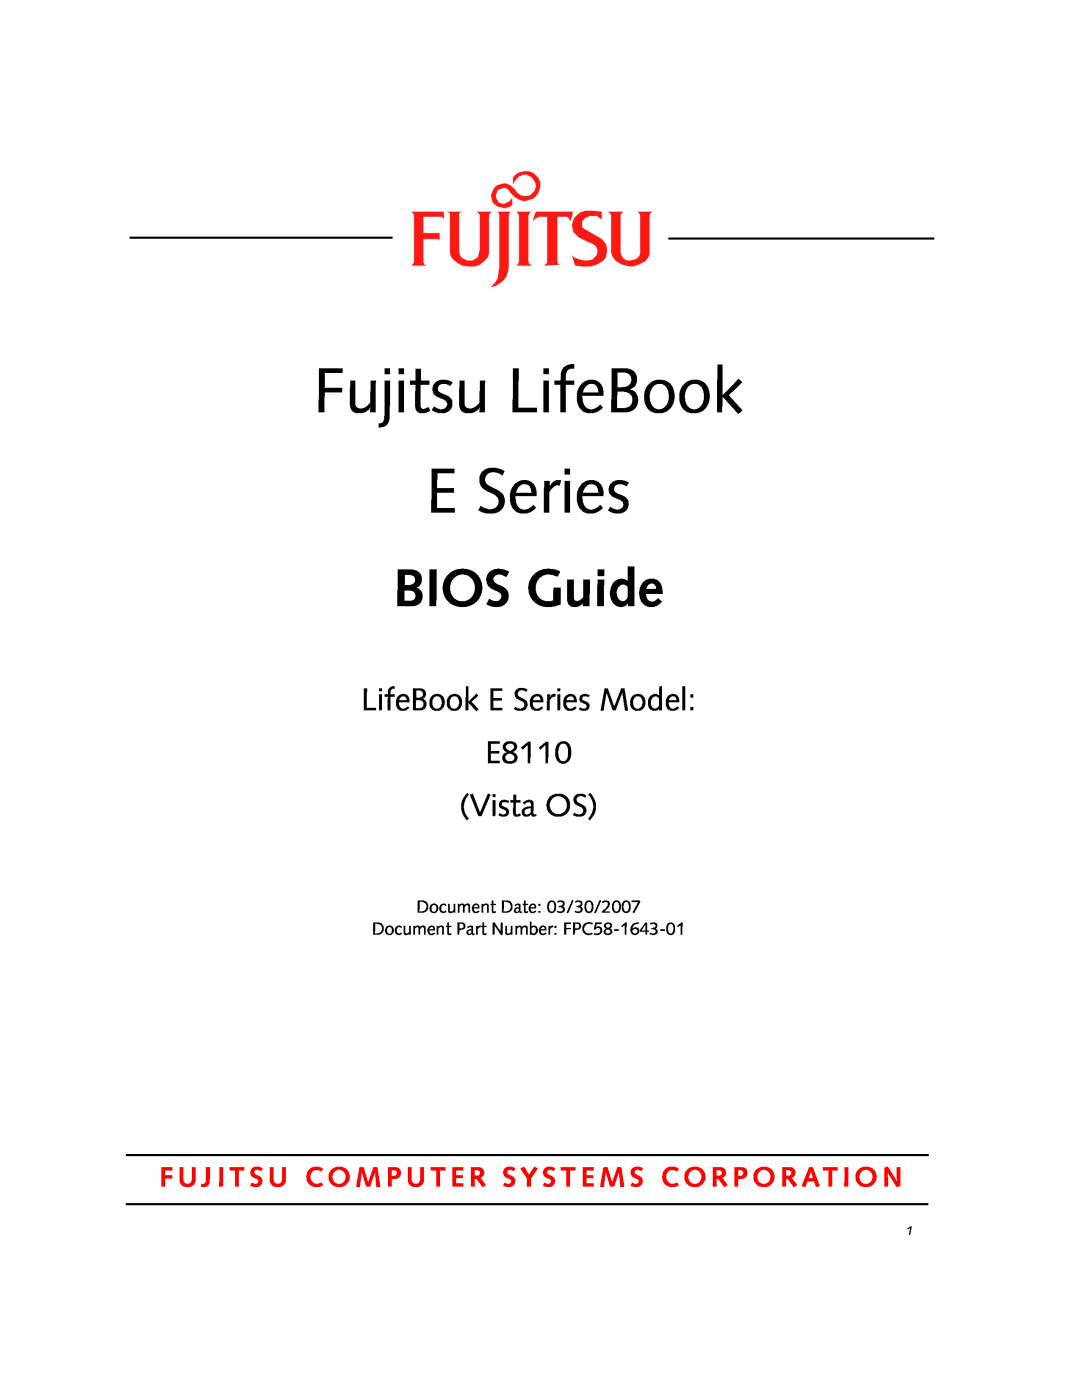 Fujitsu Siemens Computers manual Fujitsu LifeBook E Series, BIOS Guide, LifeBook E Series Model E8110 Vista OS 